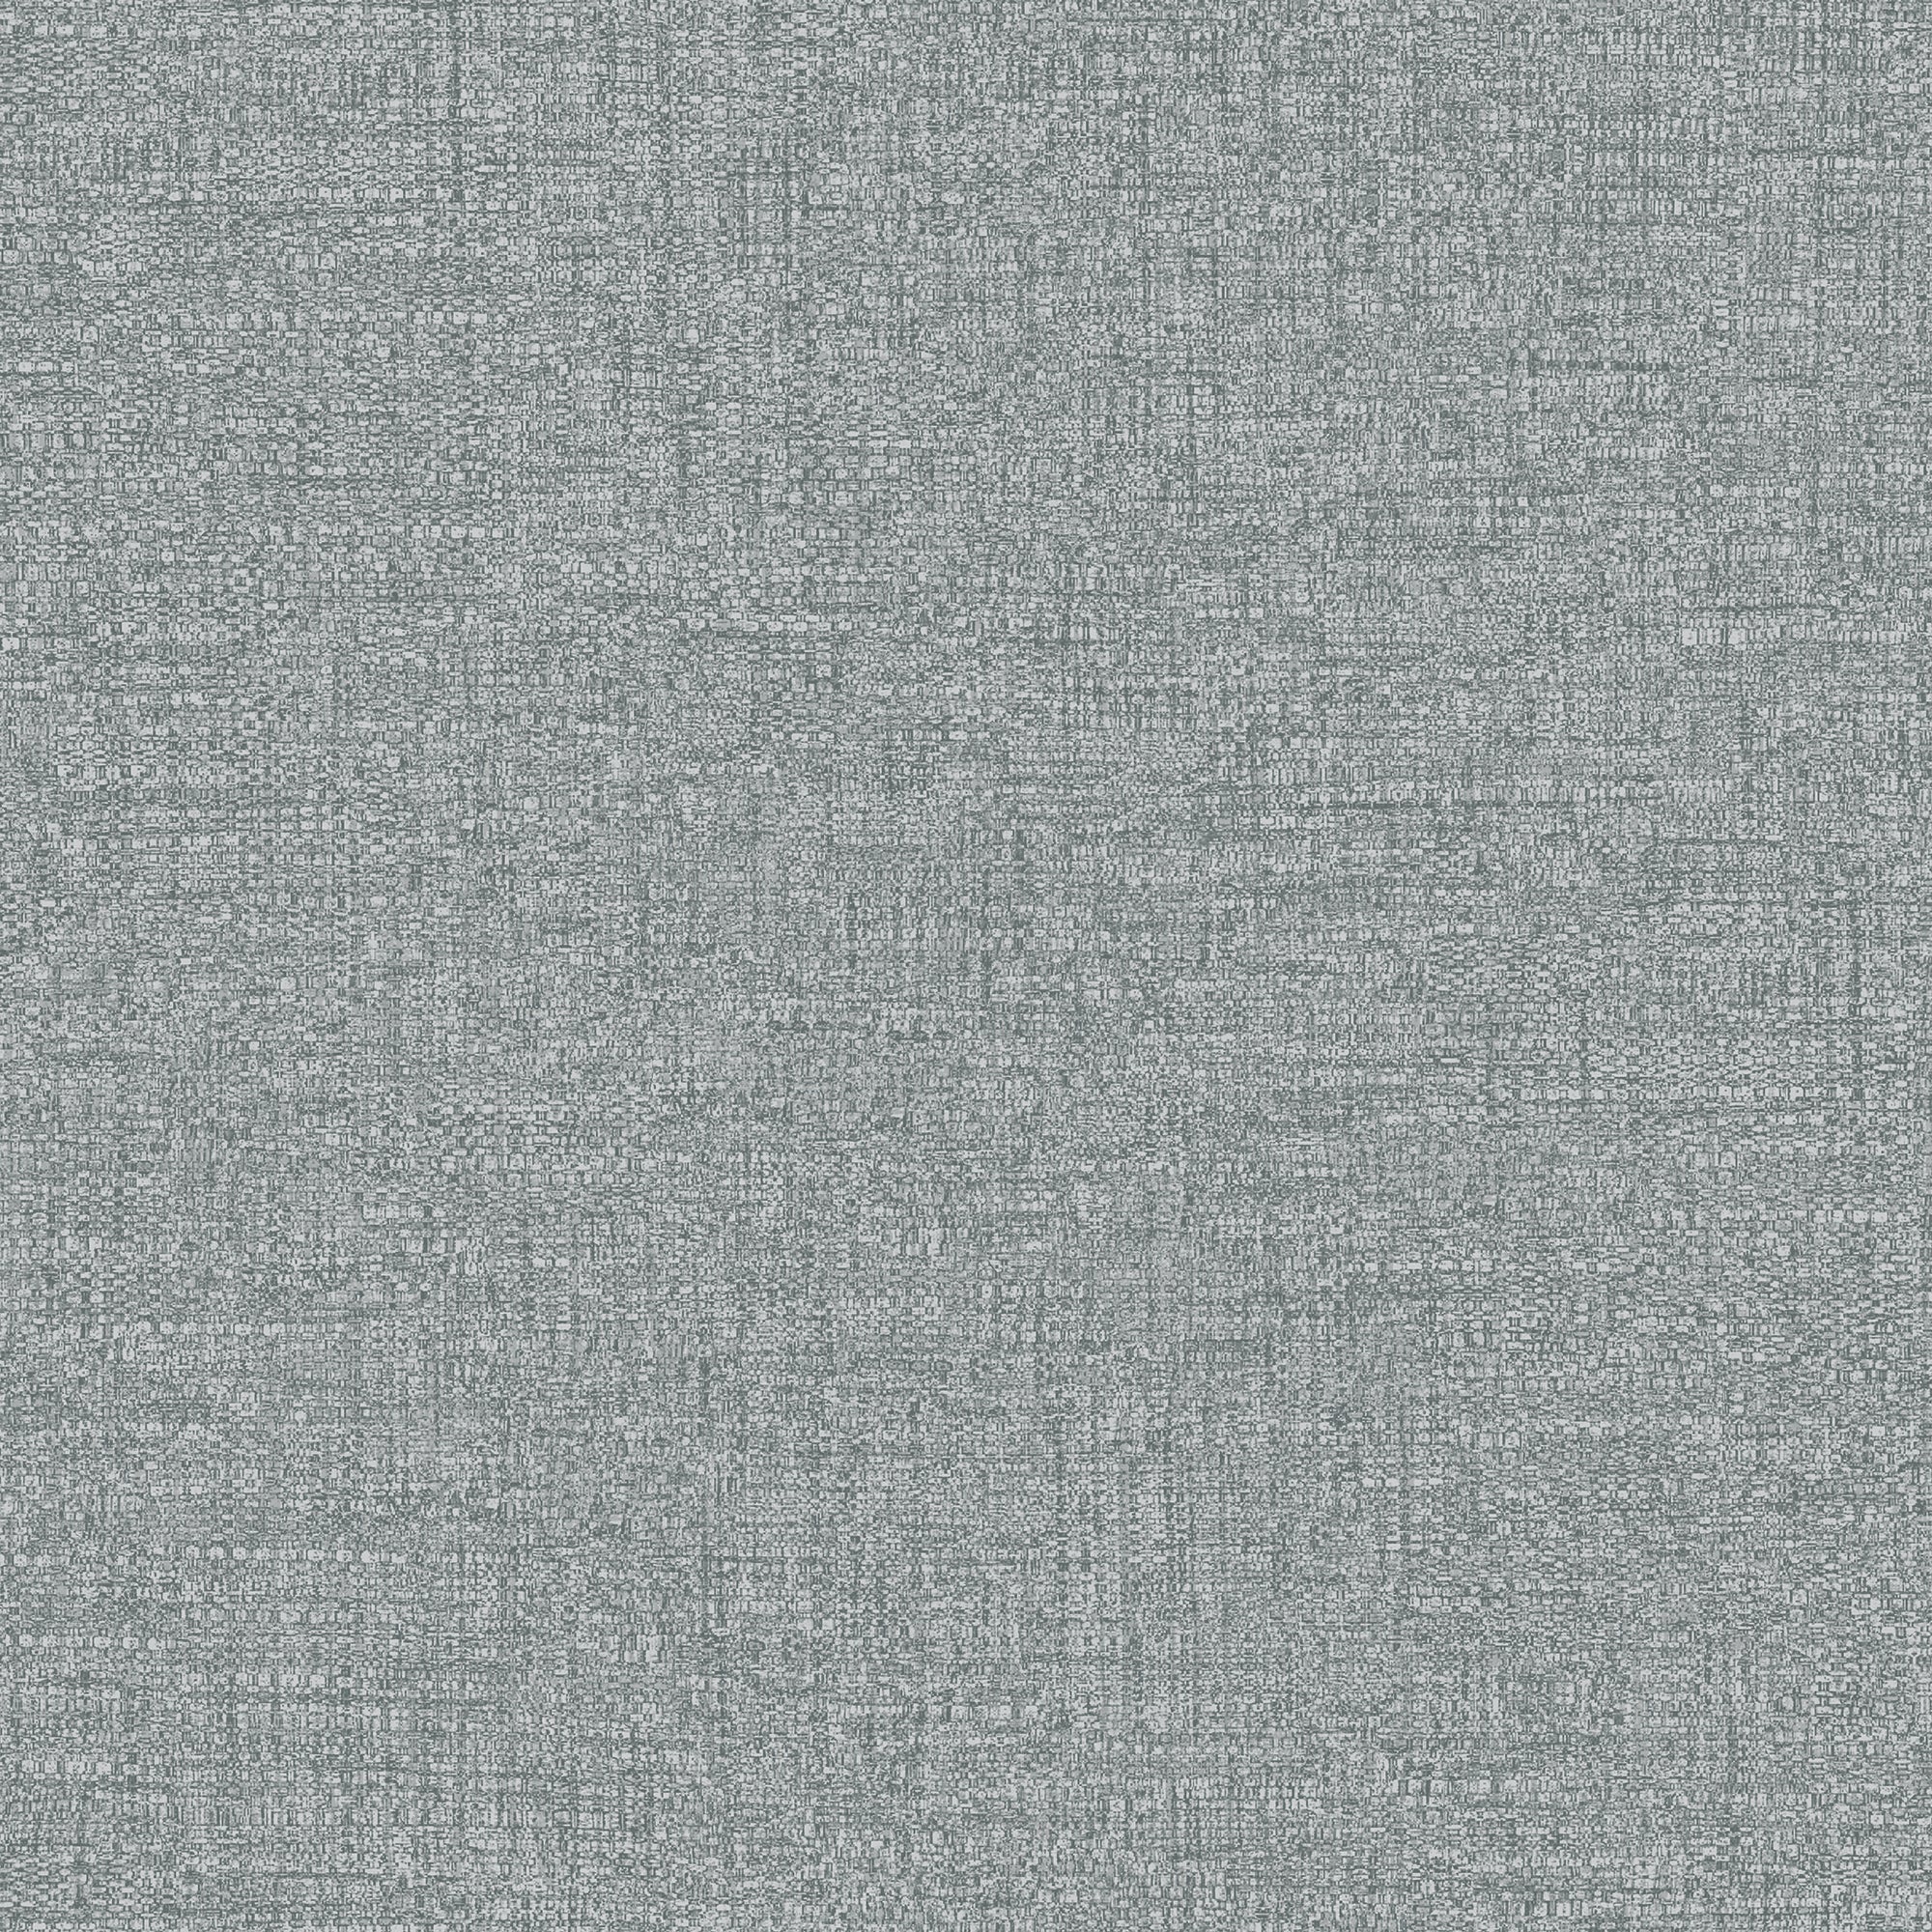 Paul Moneypenny Rotan Blue Wallpaper | Fabric Wallpaper | 196607